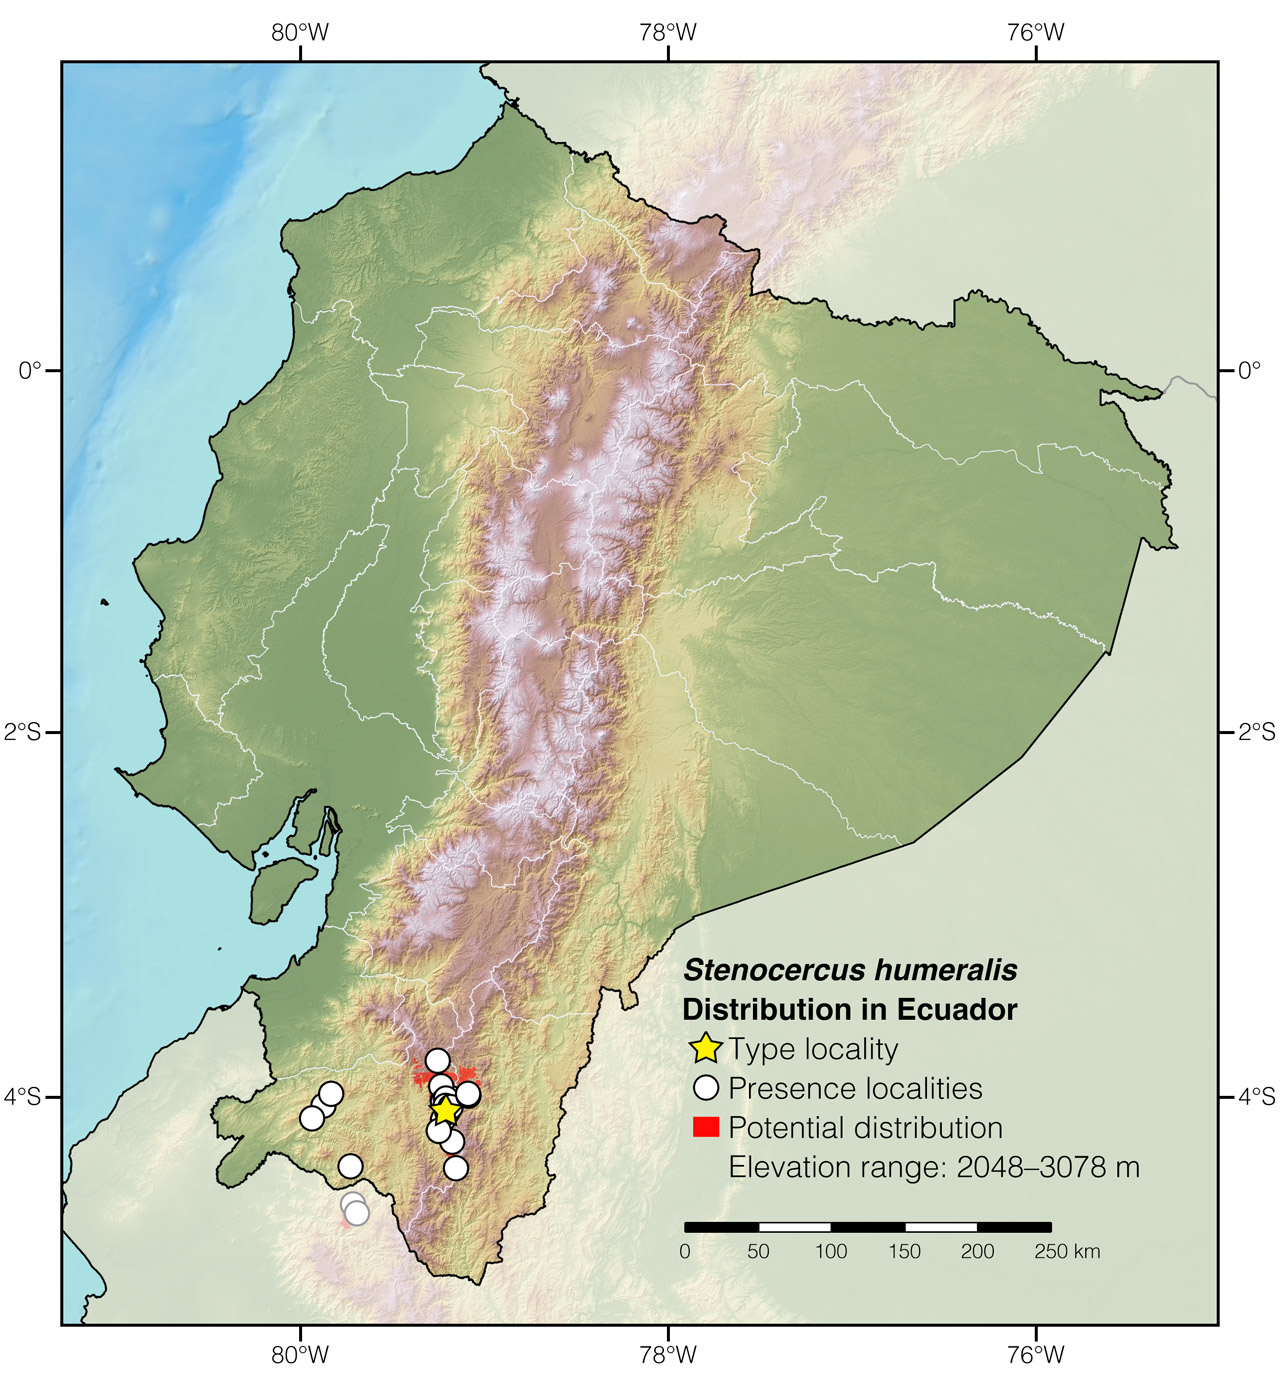 Distribution of Stenocercus humeralis in Ecuador